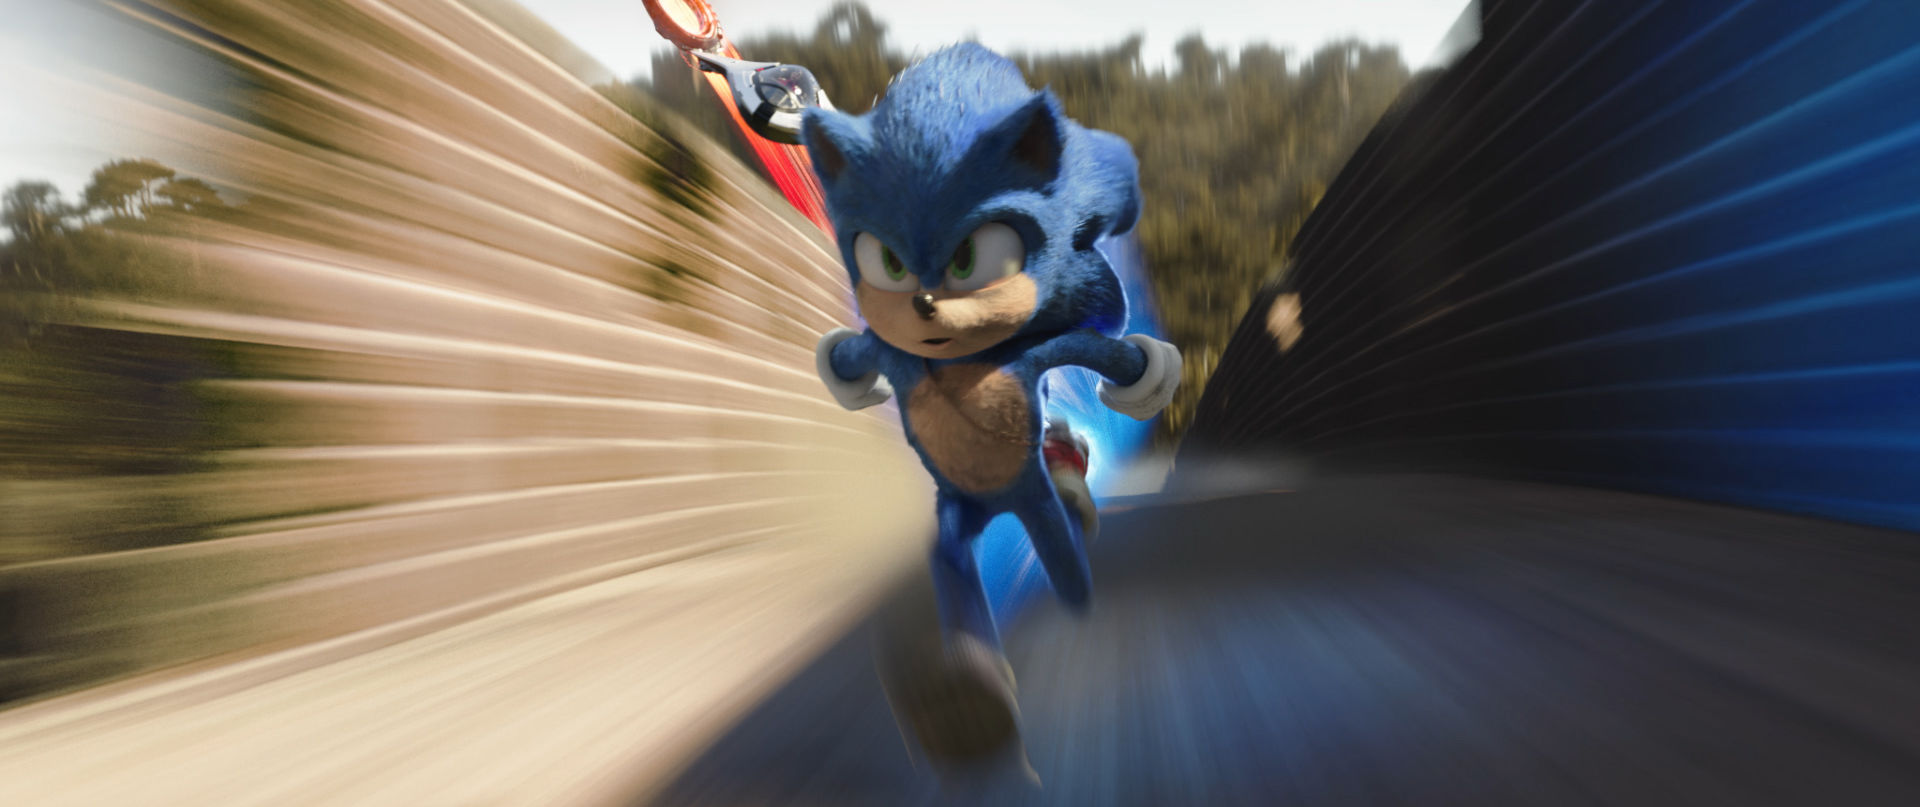 ¿Podría Sonic sobrevivir corriendo a velocidades supersónicas?